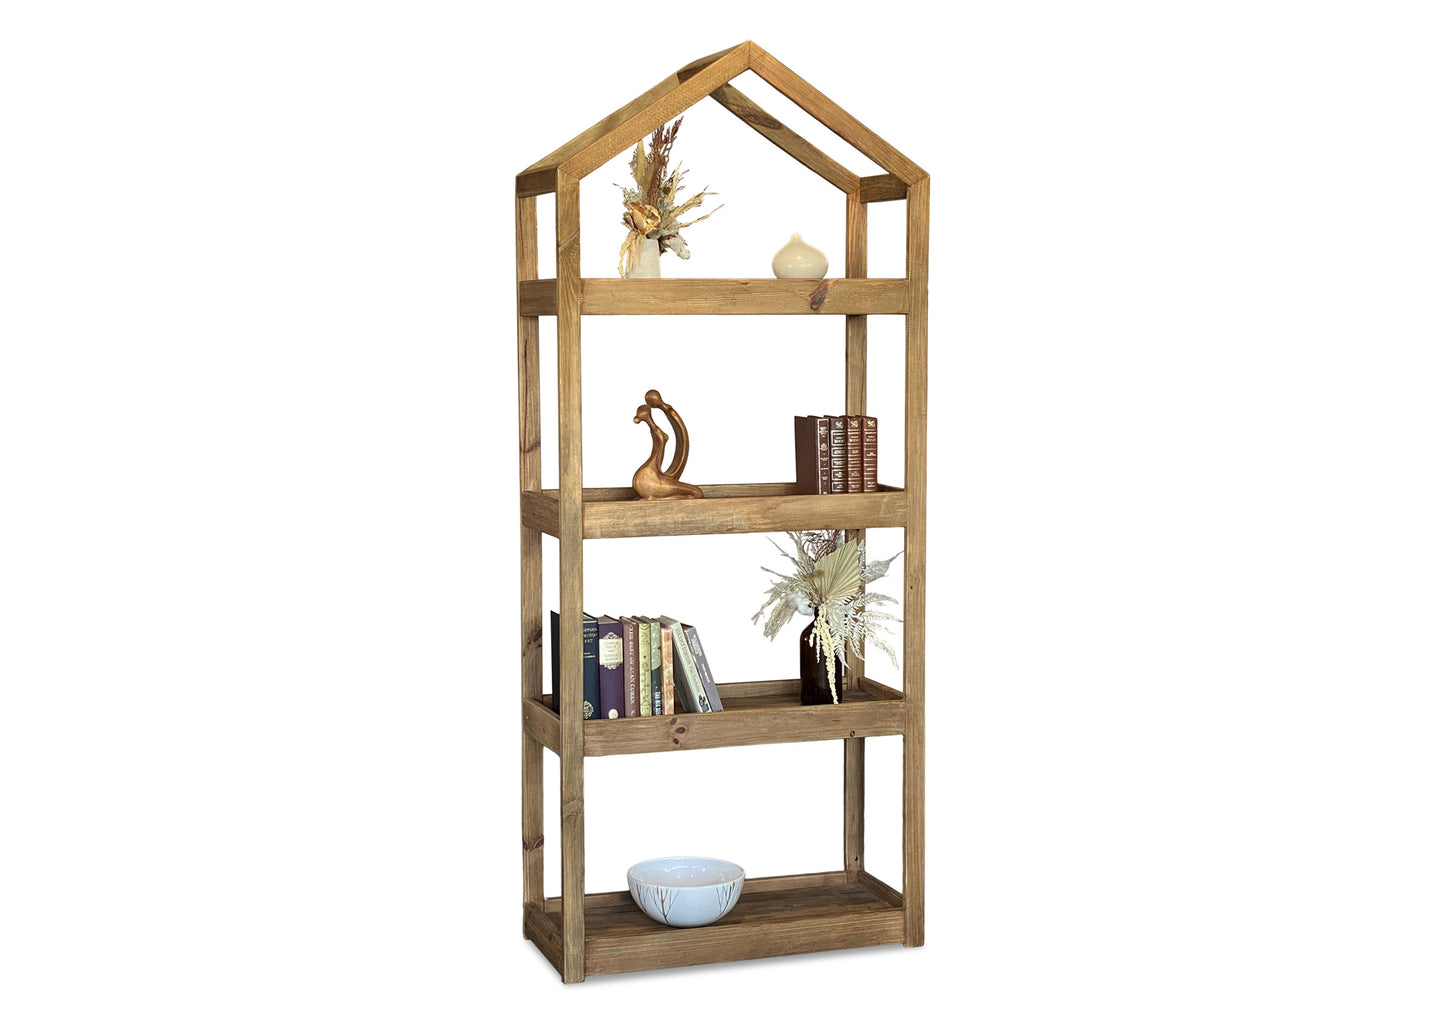 Plantation Bookcase - Birdhouse